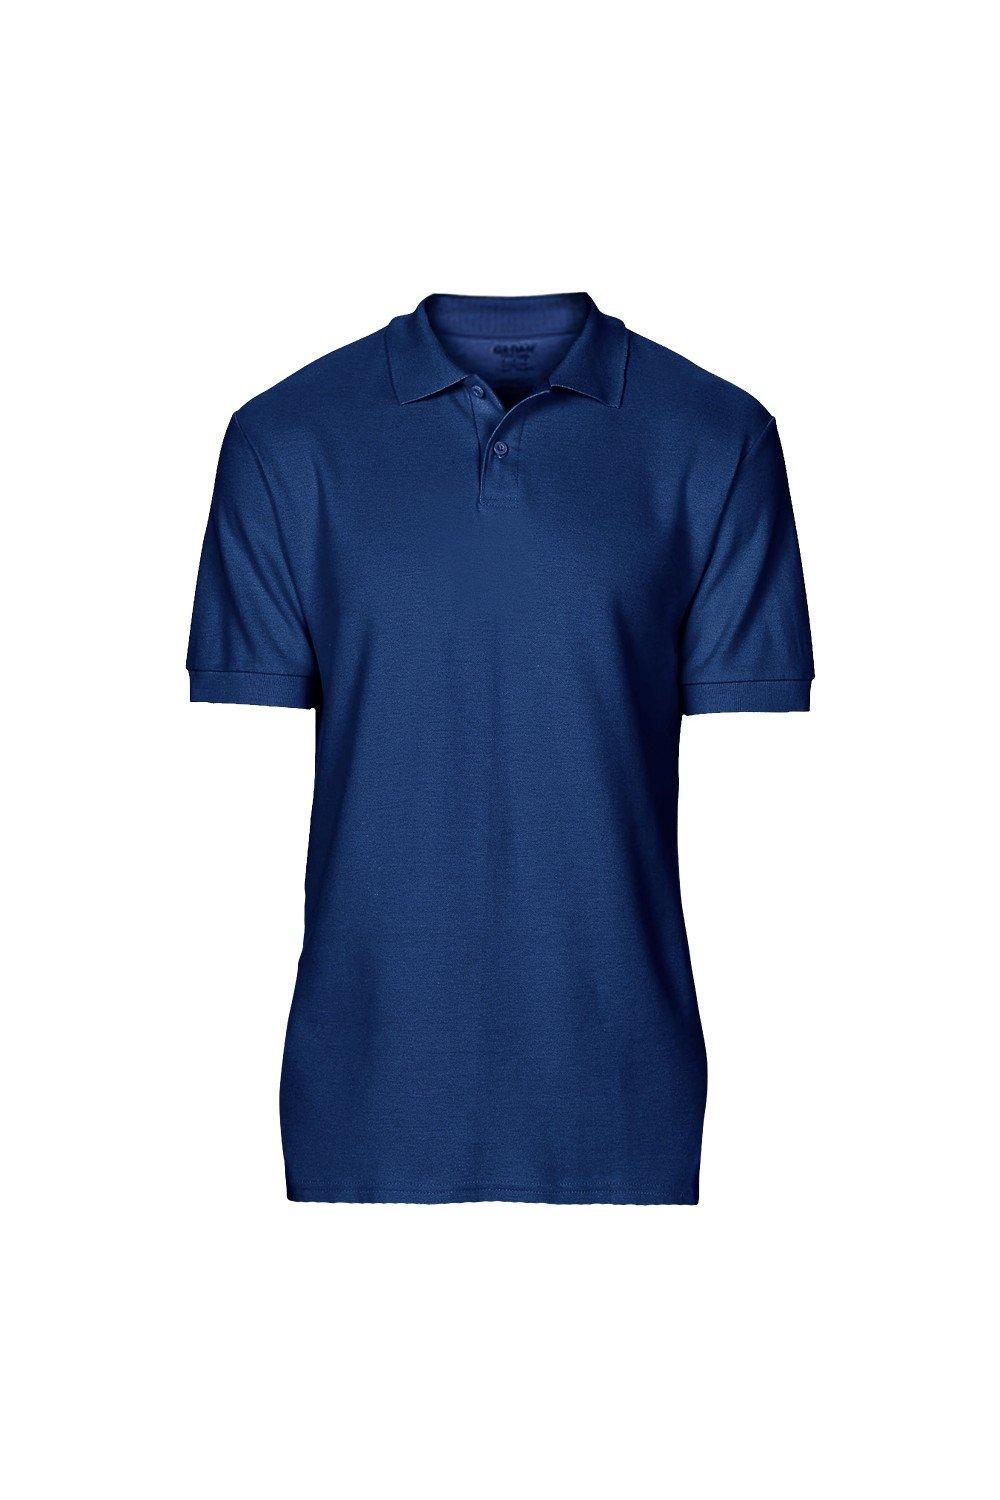 Рубашка поло из двойного пике с короткими рукавами Softstyle Gildan, темно-синий